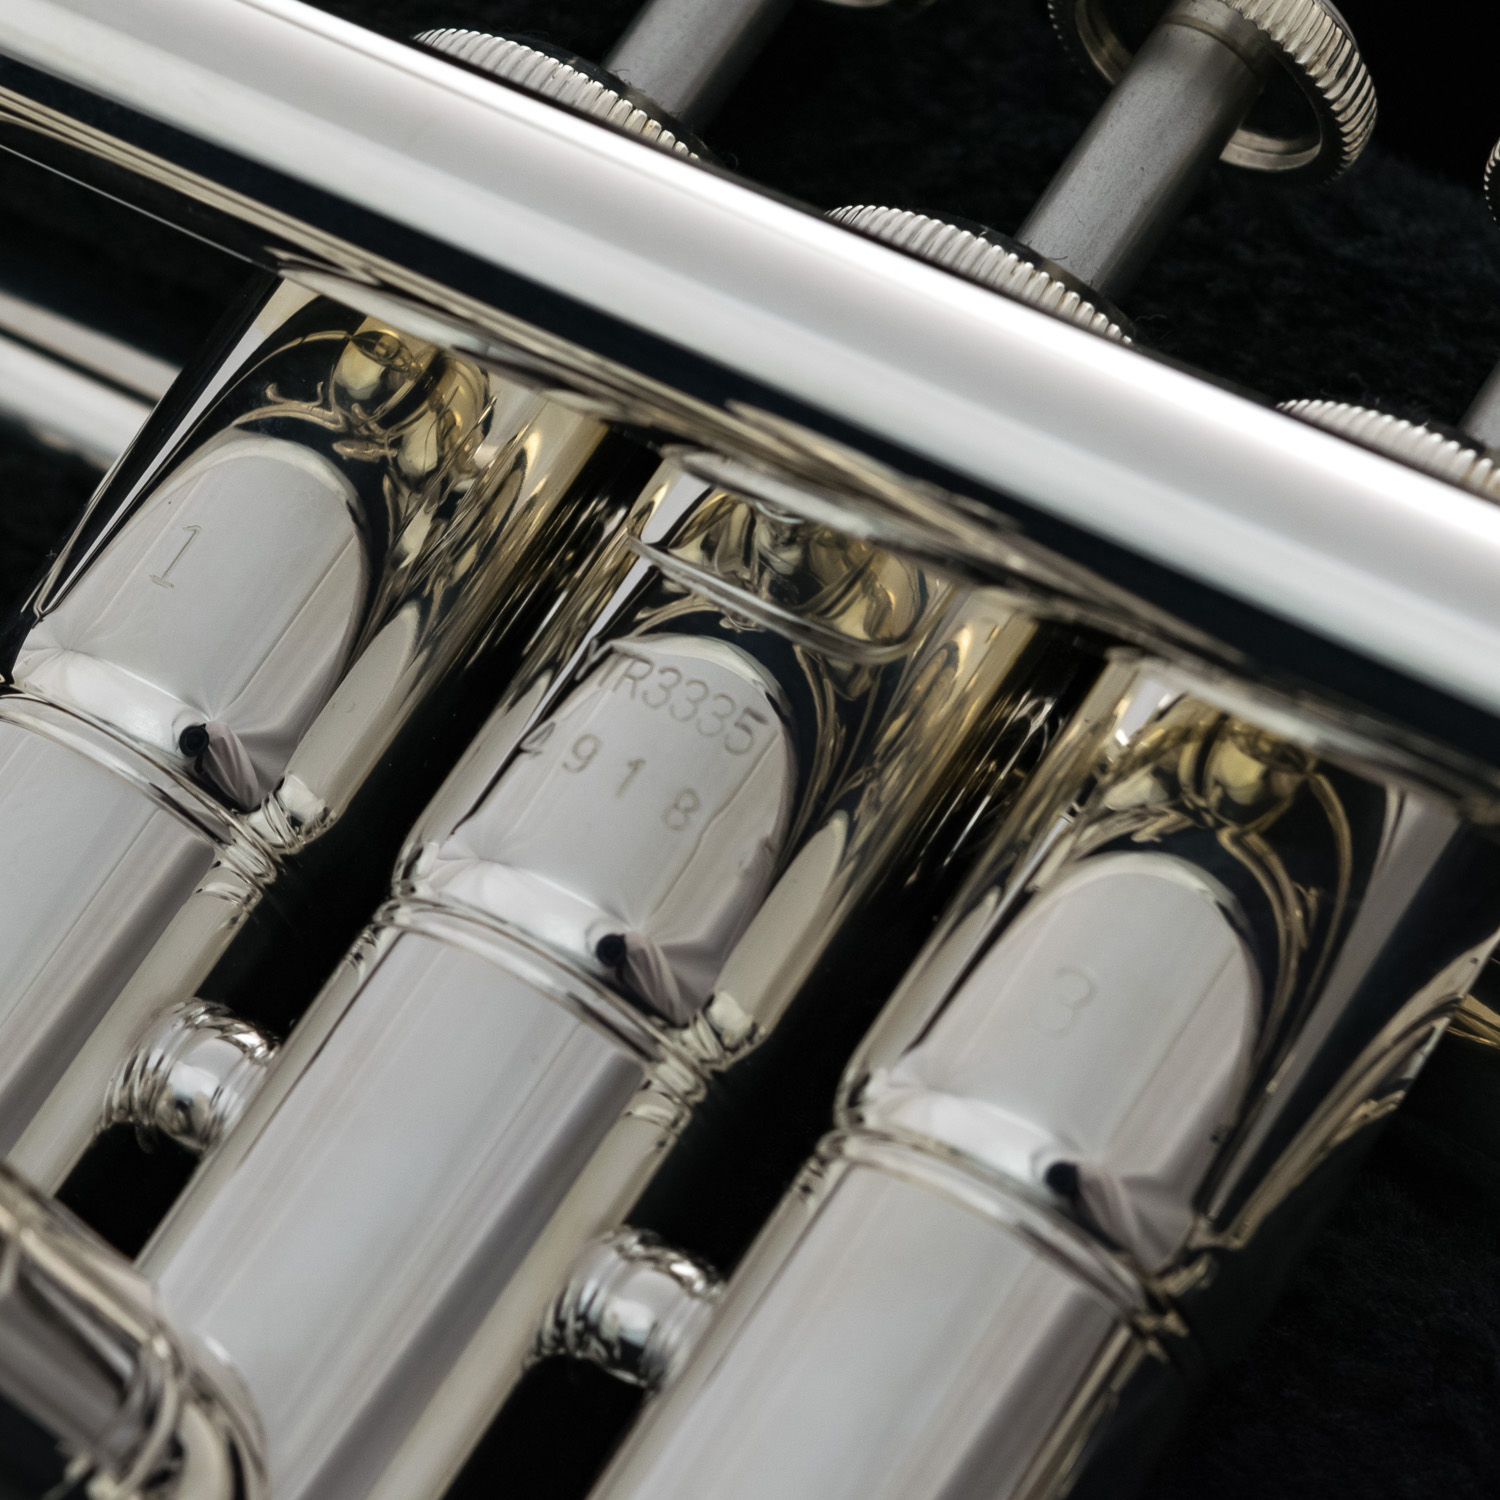 Yamaha Bb Trumpet - YTR 3335 S